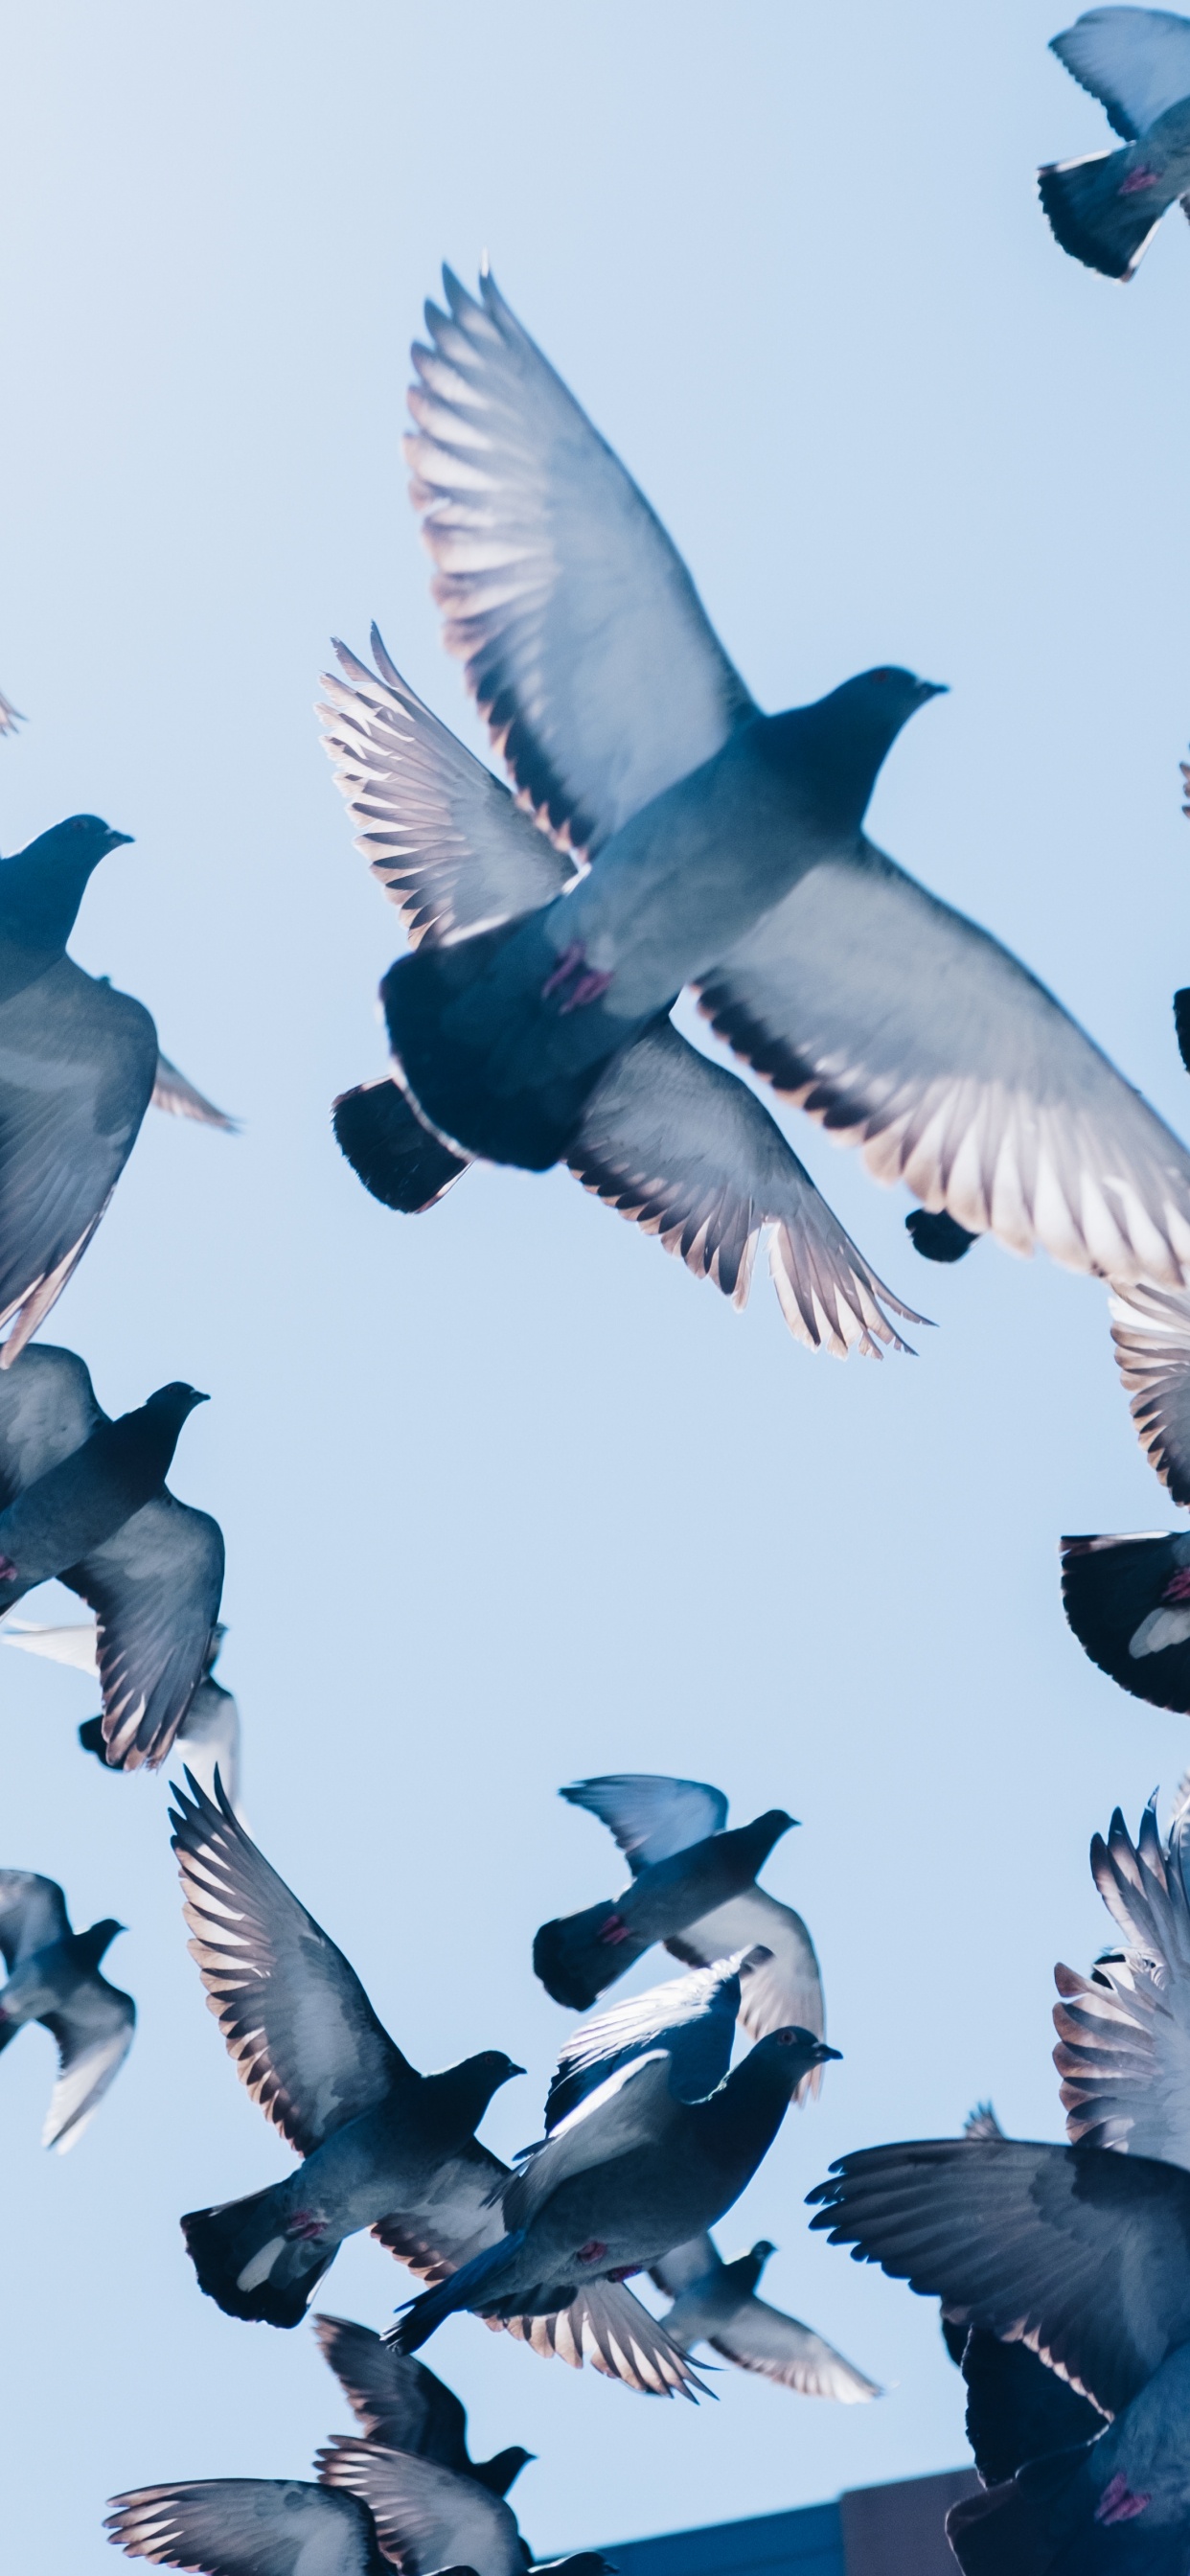 Flock of Birds Flying Under Blue Sky During Daytime. Wallpaper in 1242x2688 Resolution